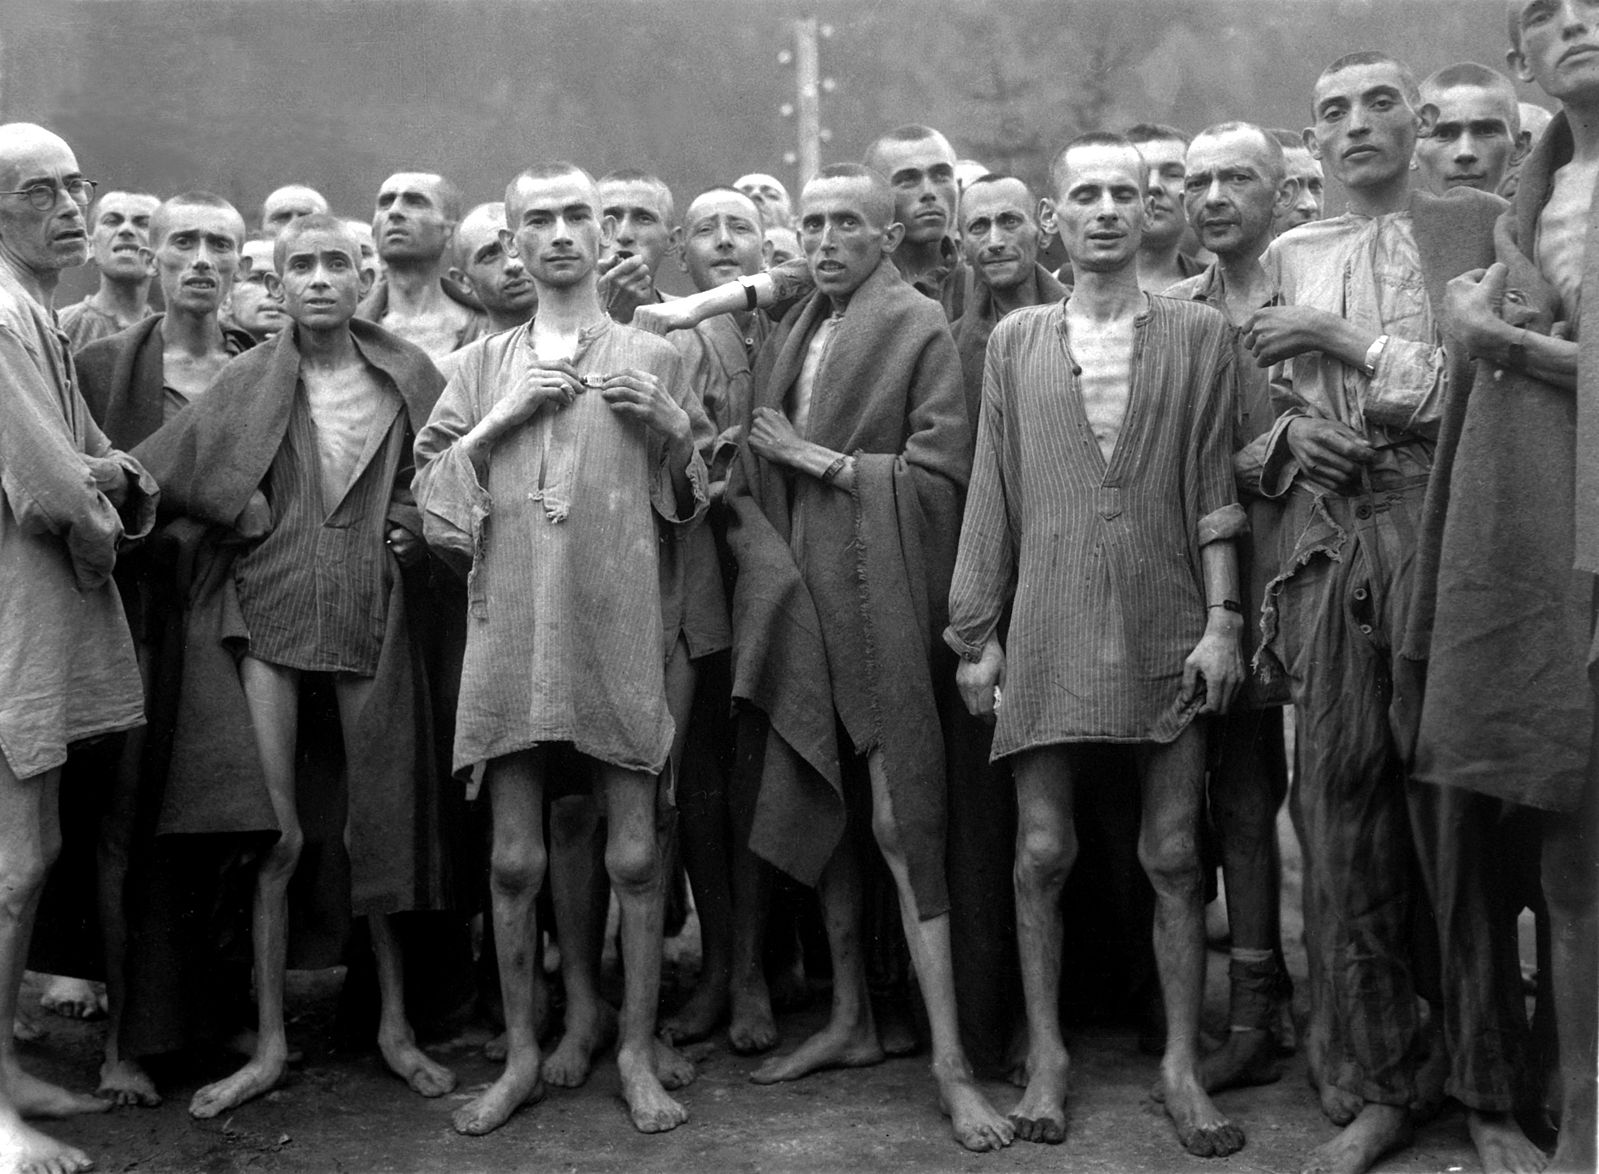 1599px-Ebensee_concentration_camp_prisoners_1945-1.jpg